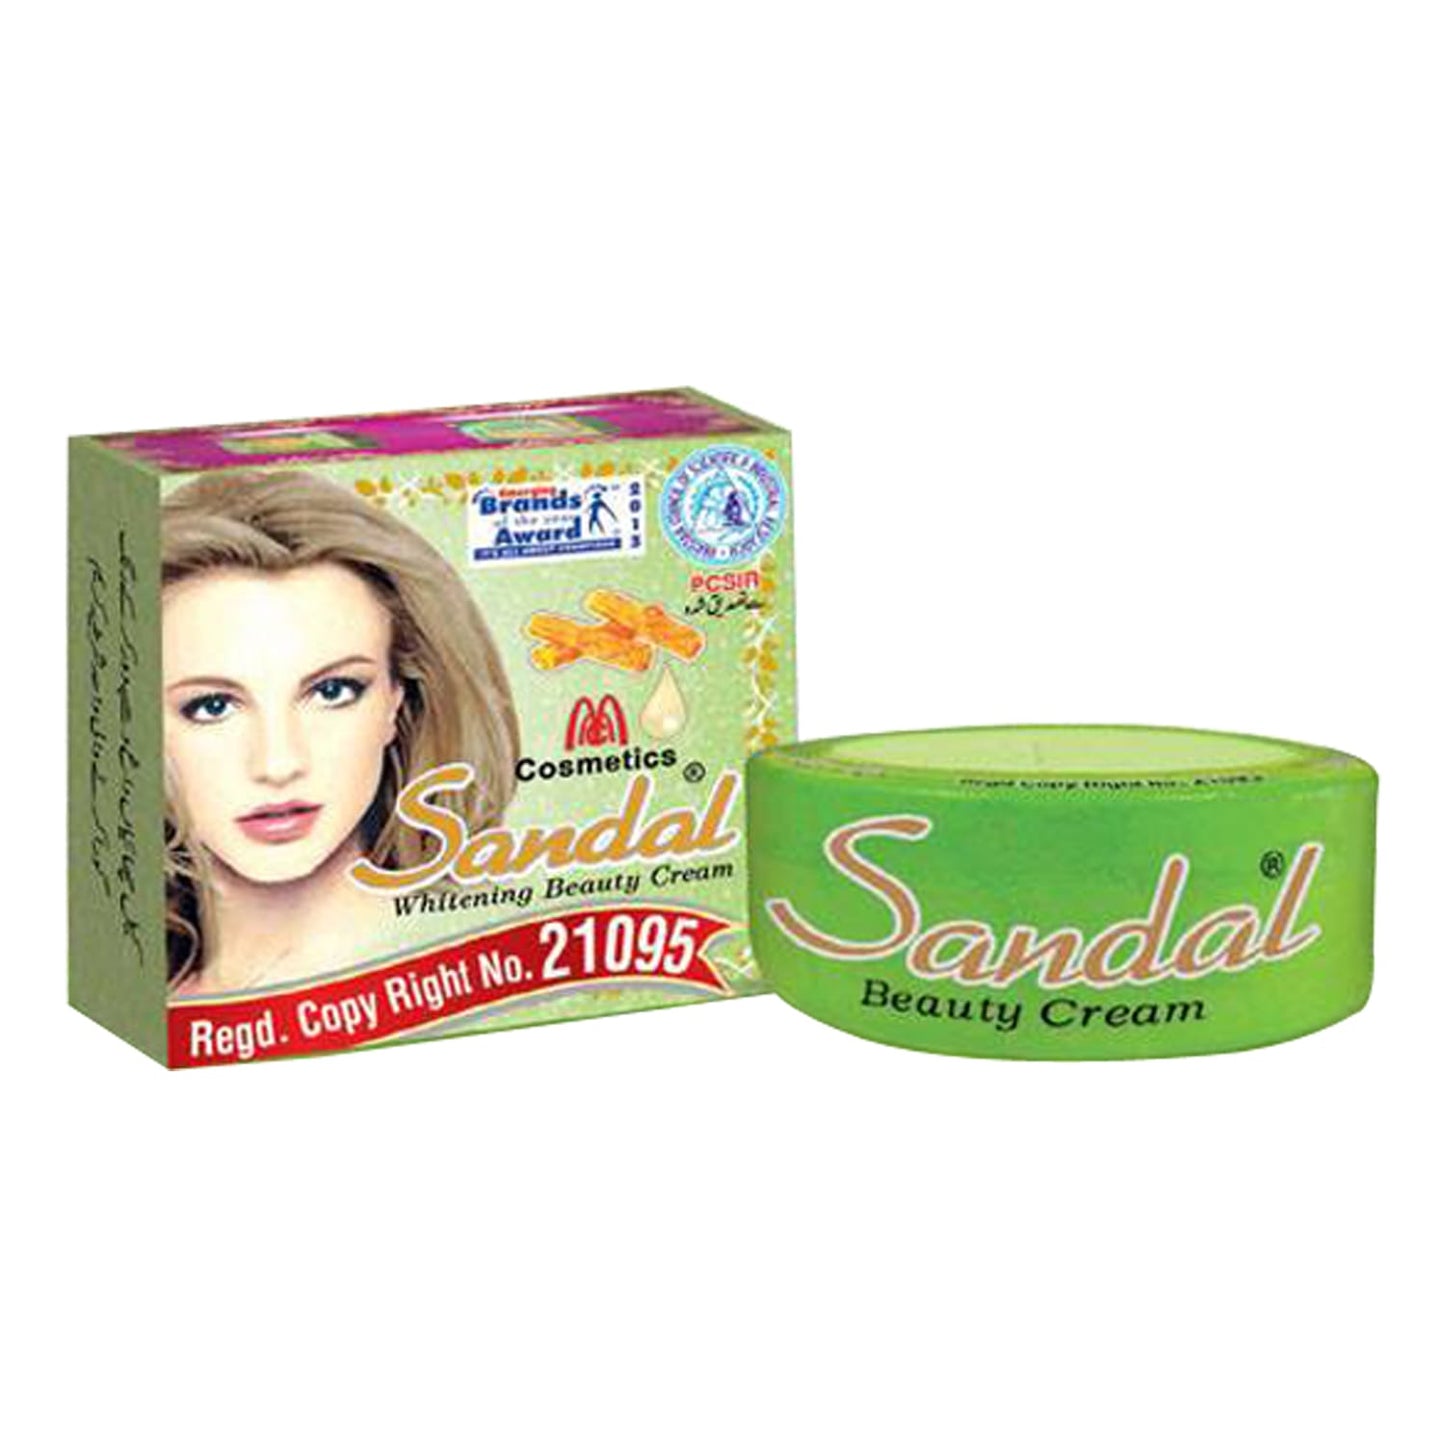 Sandal Beauty Cream